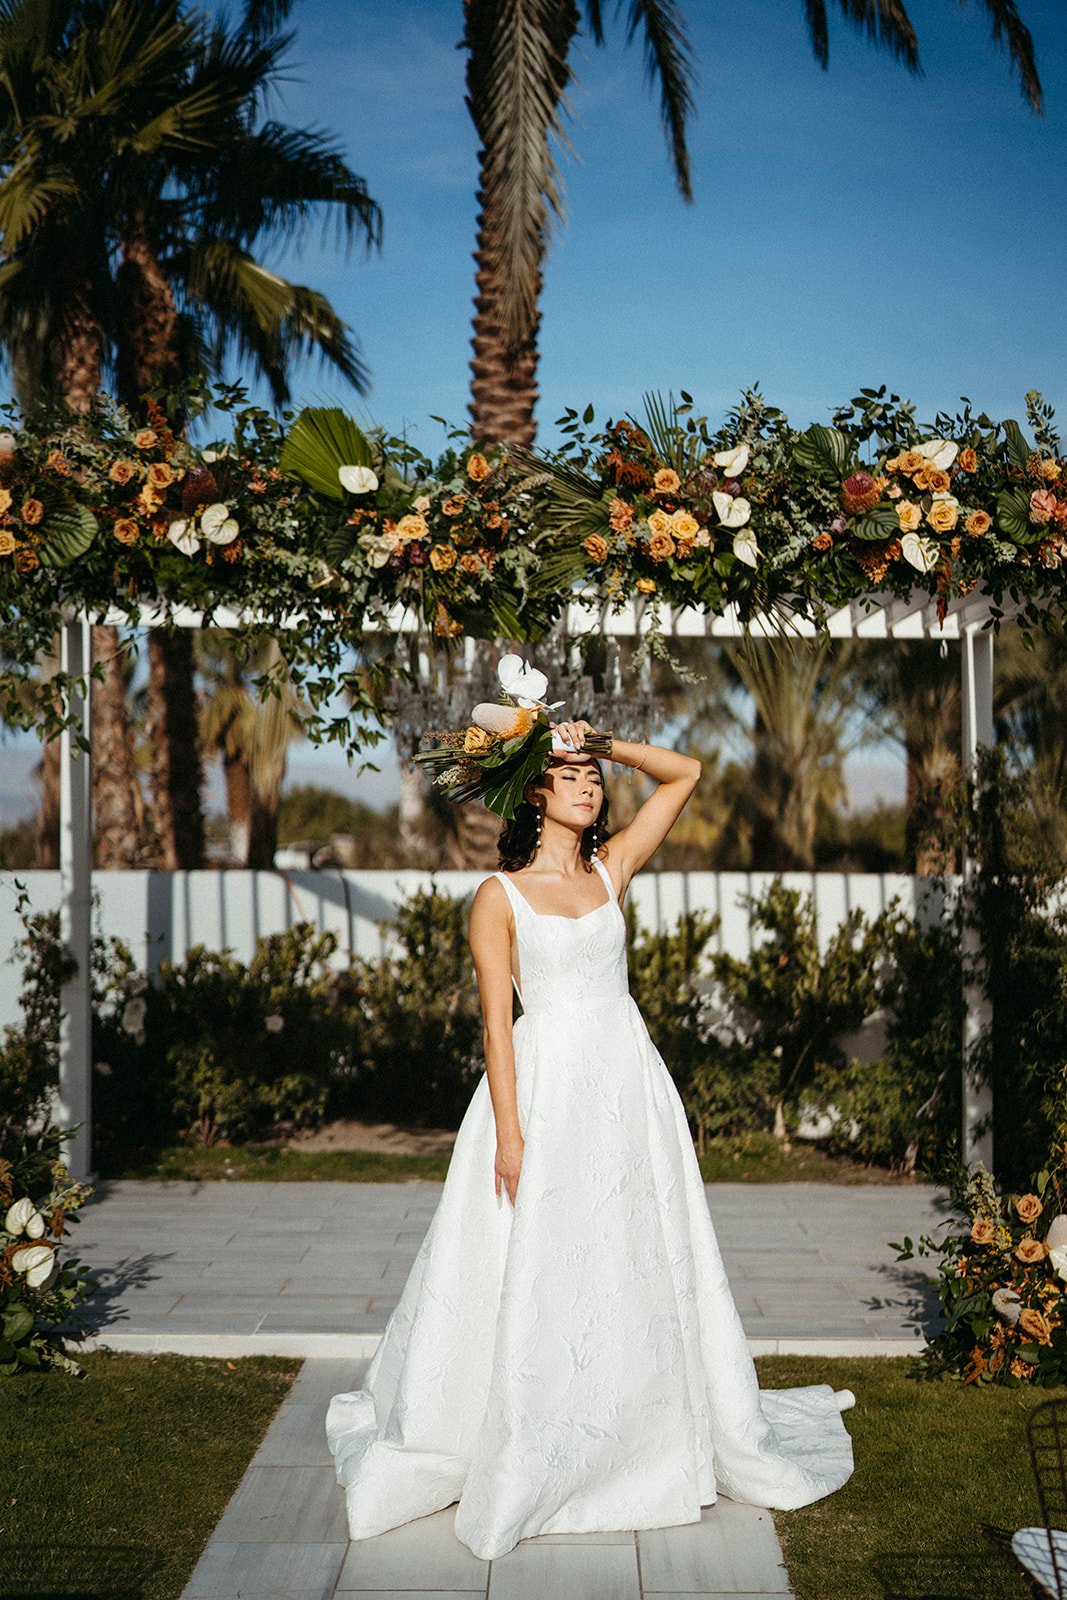  high fashion wedding editorial palm springs desert floral Anne Barge Coraline square neckline 